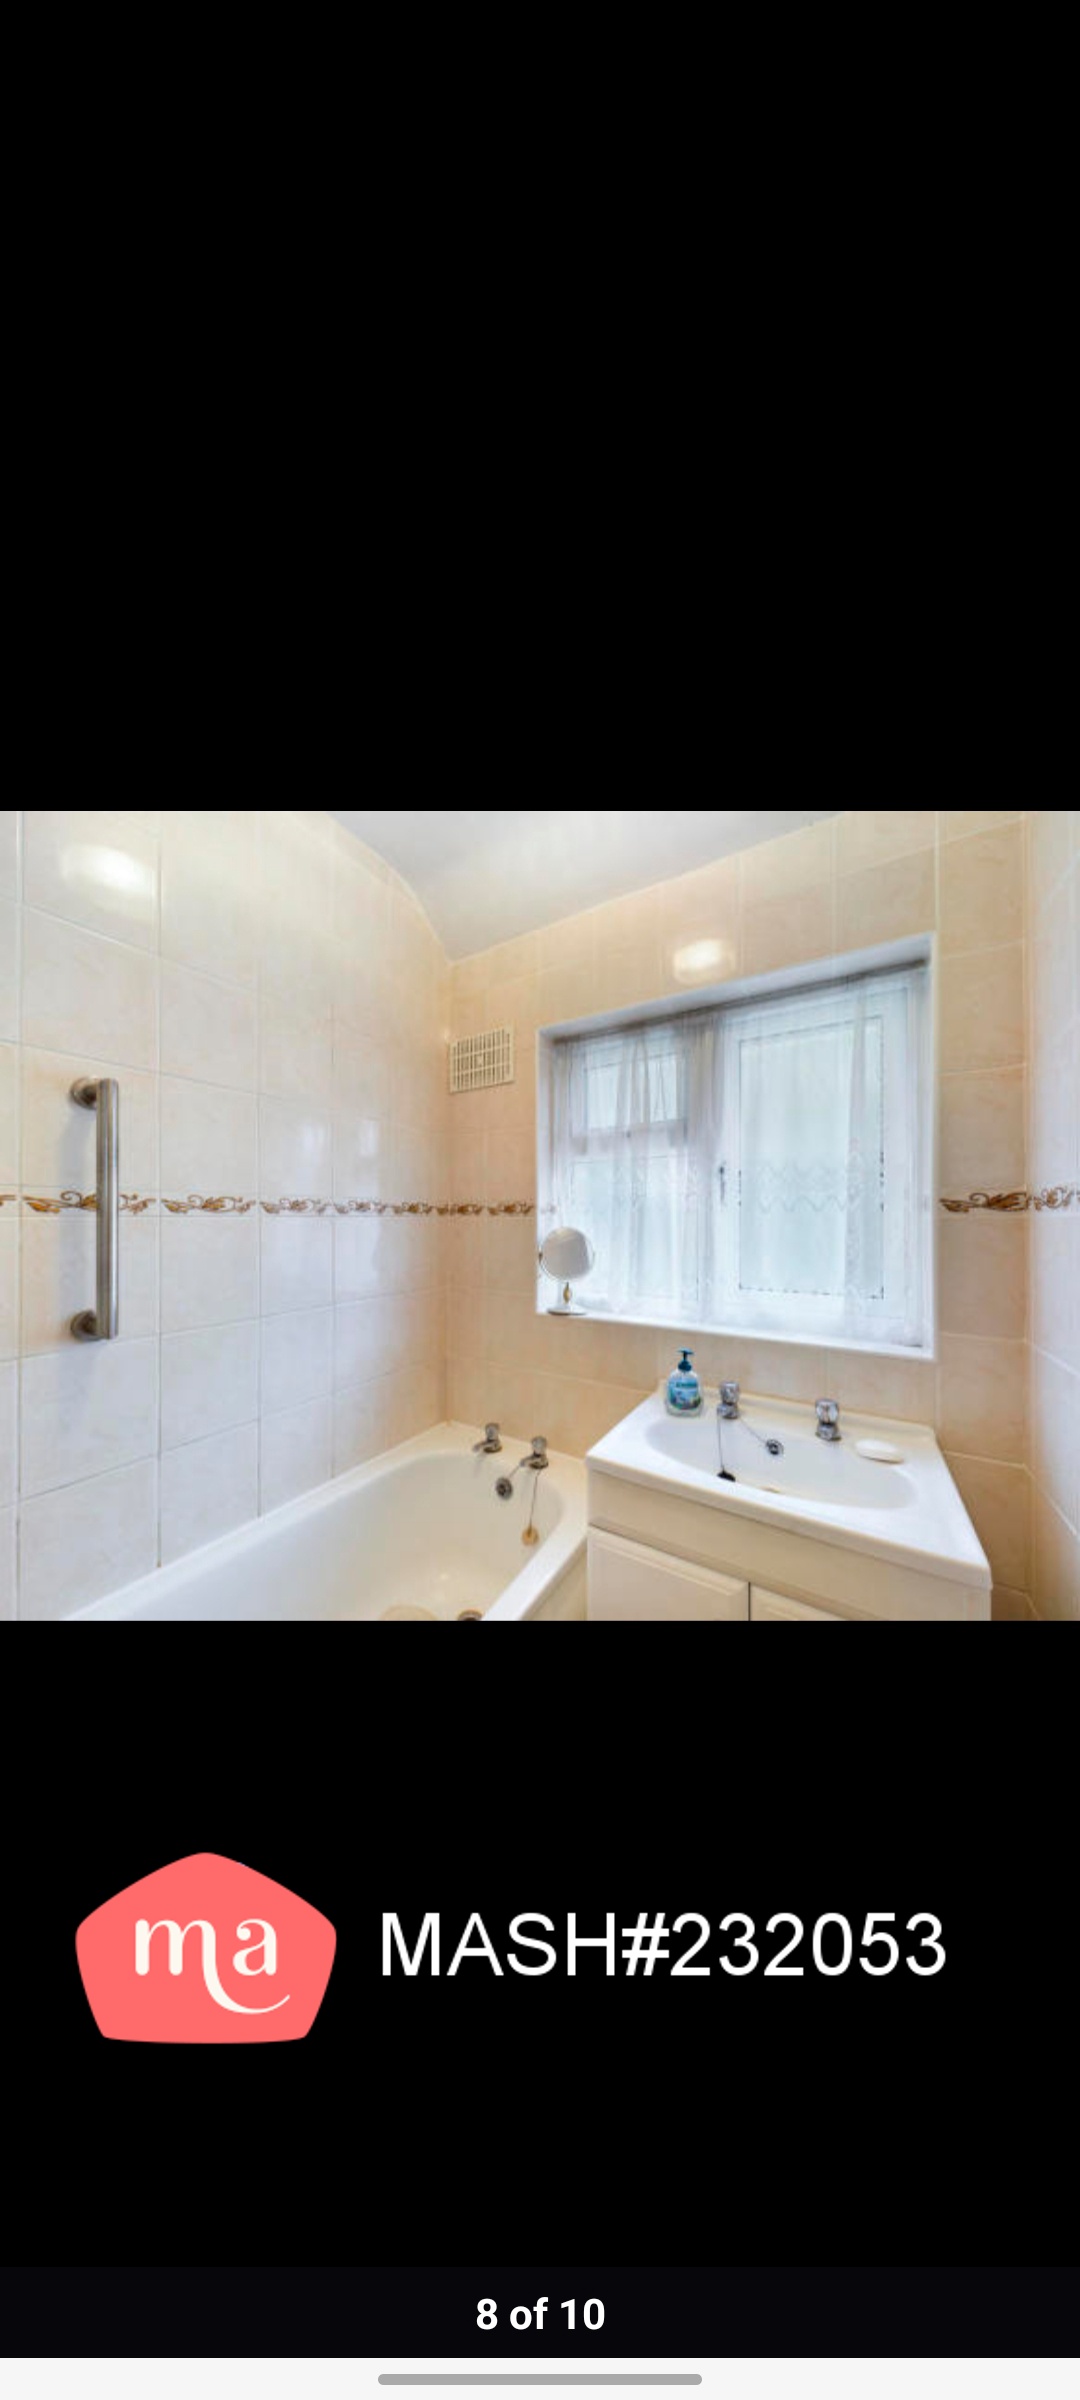 2 Bedroom Semi-detached to rent in Croydon - Mashroom